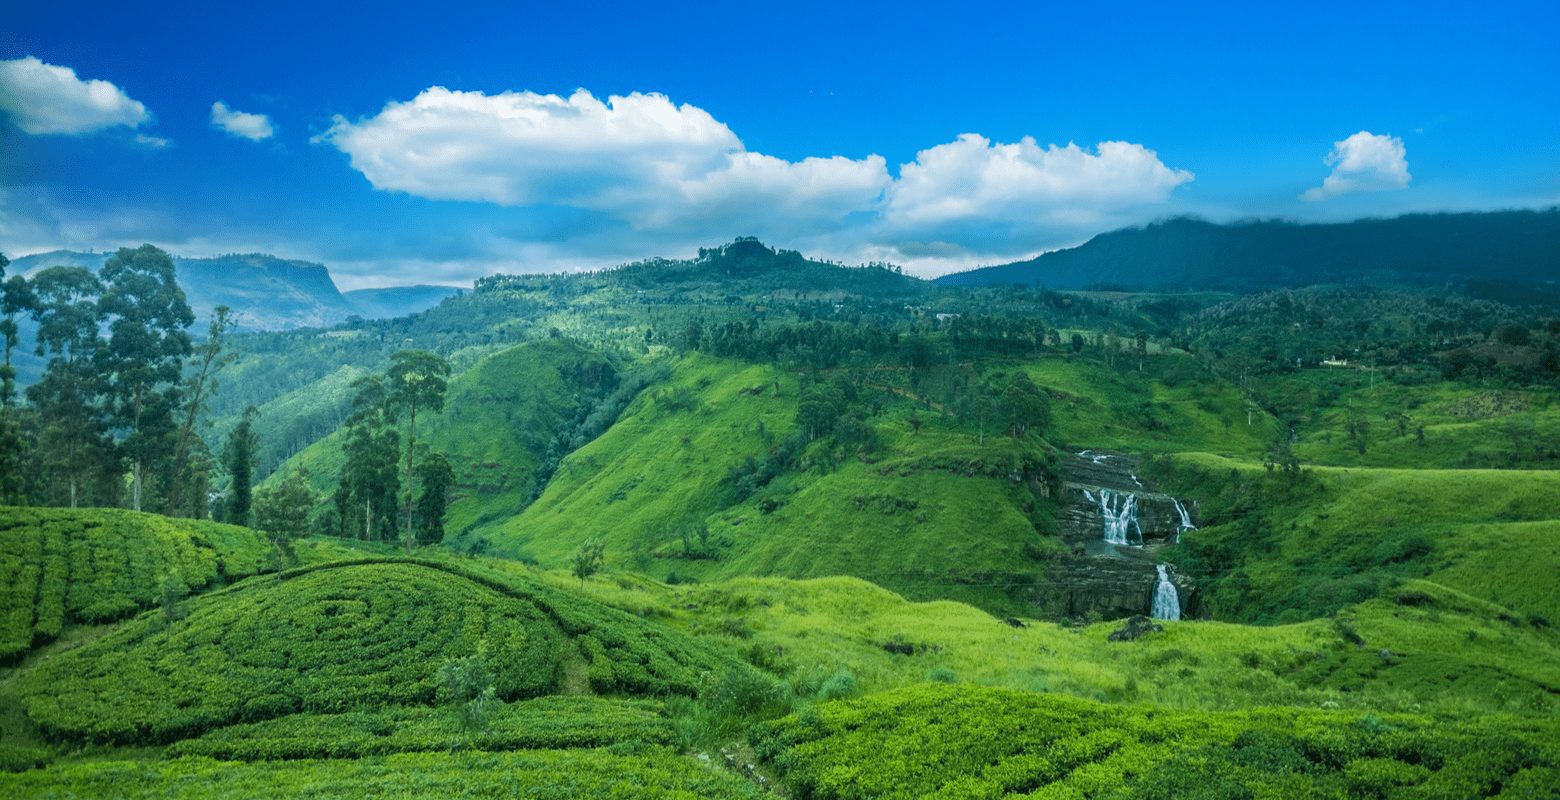 10 reasons to visit Sri Lanka cover photo featuring lush vegetation